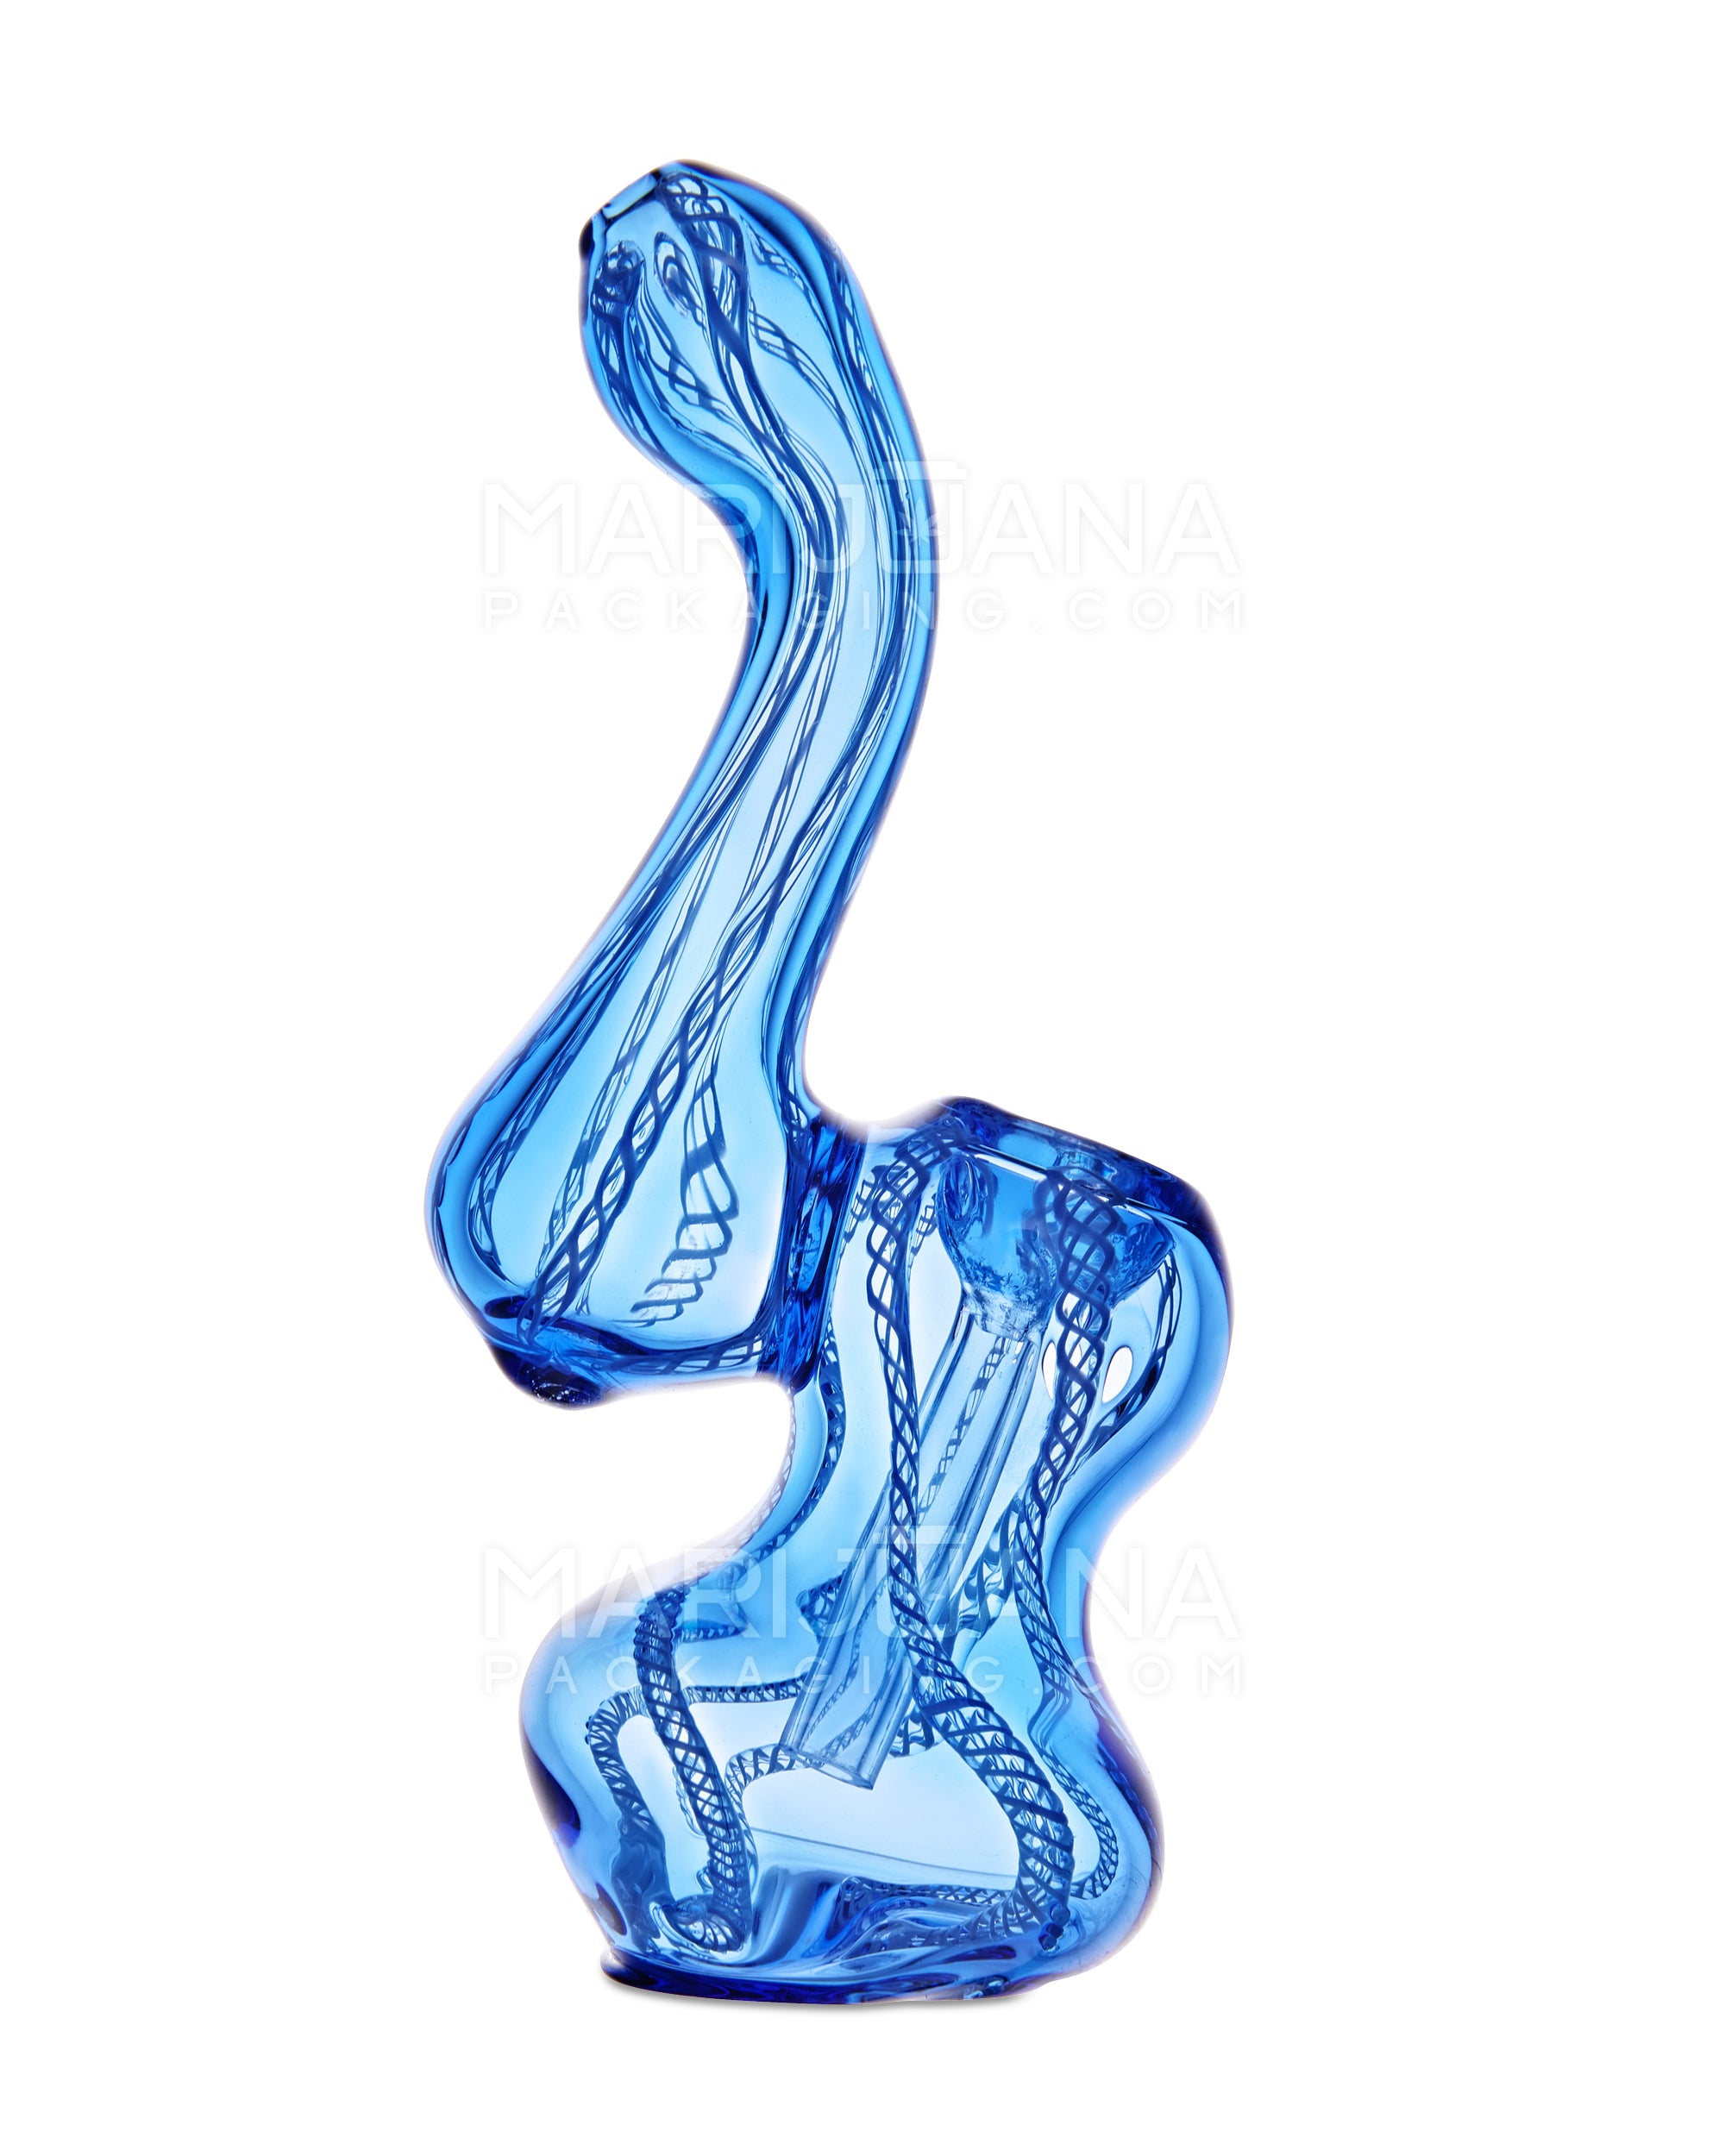 Ribboned Bubbler | 5in Tall - Glass - Blue - 1